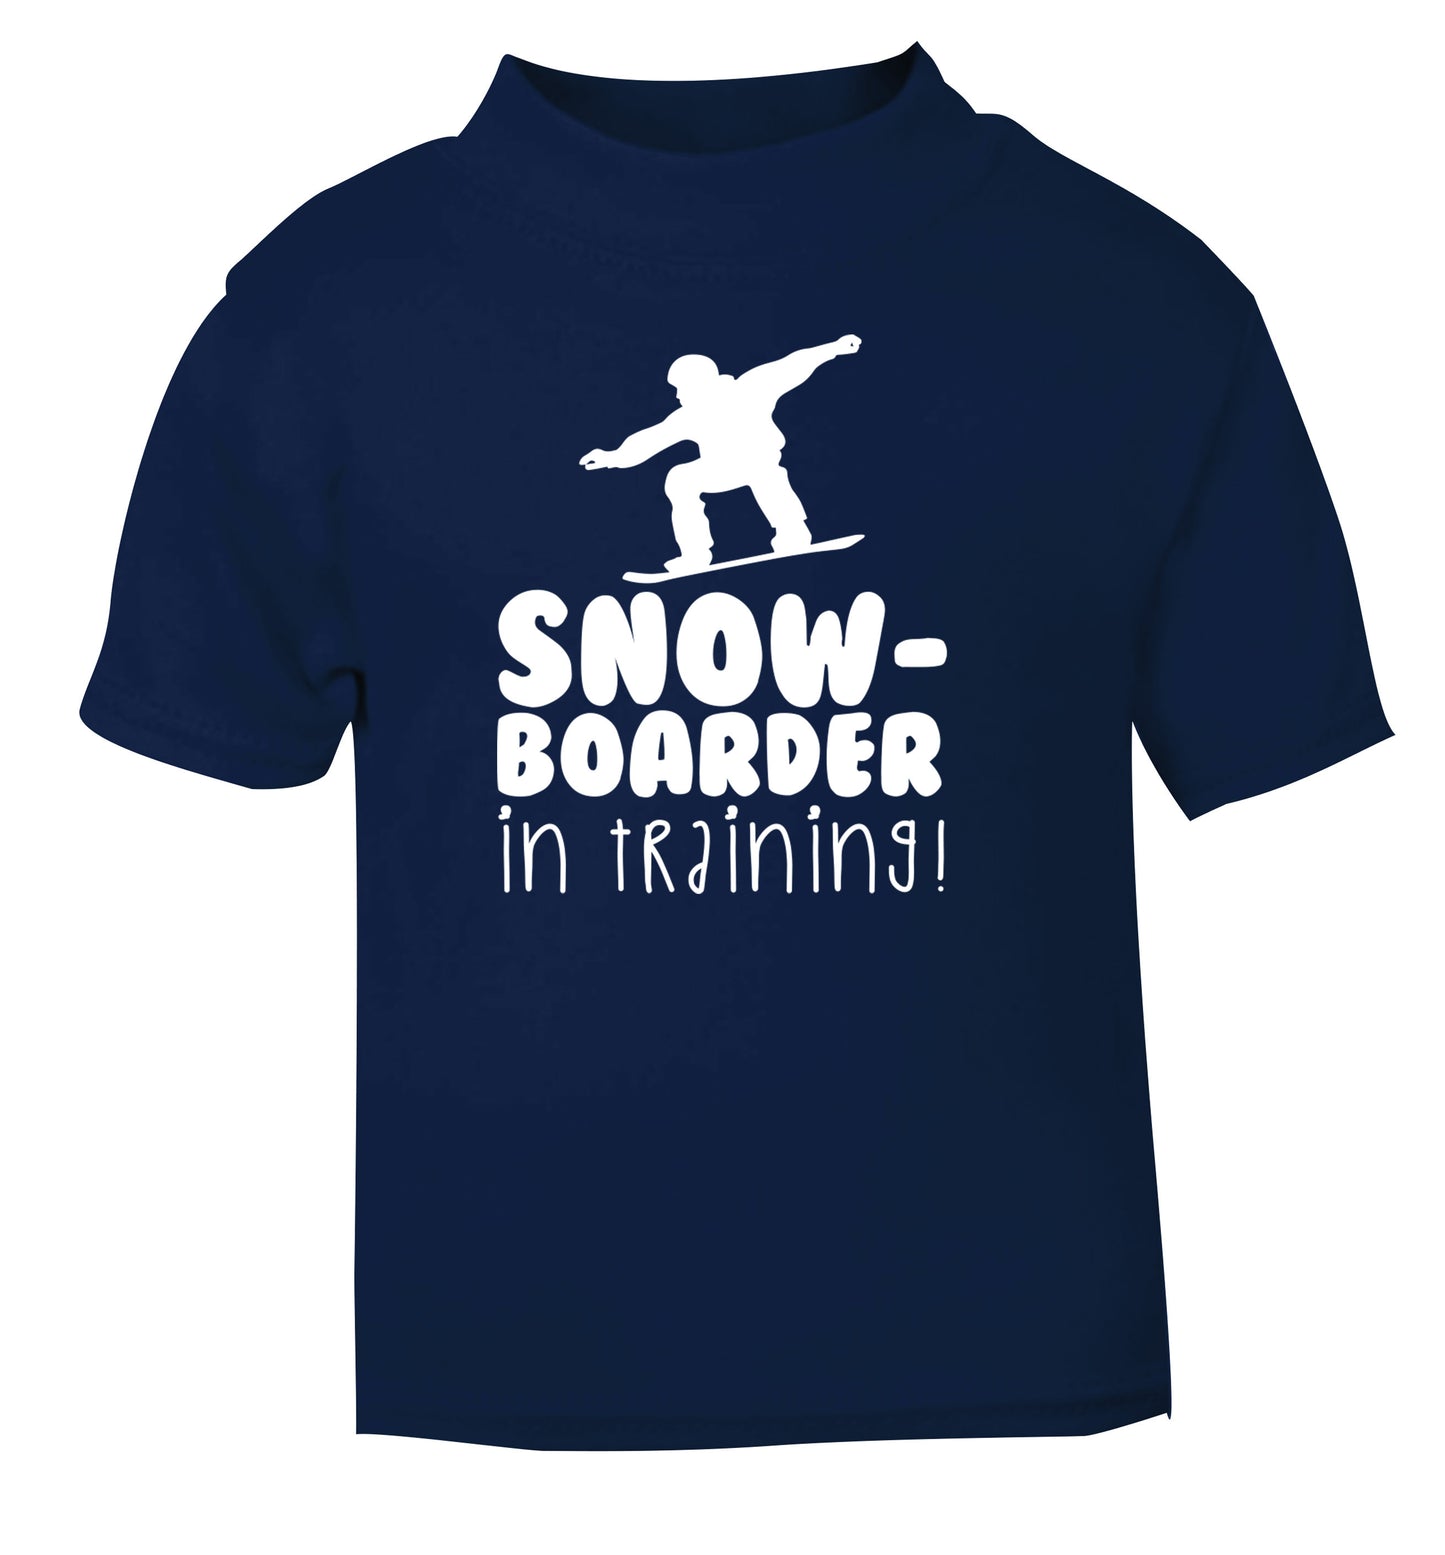 Snowboarder in training navy Baby Toddler Tshirt 2 Years